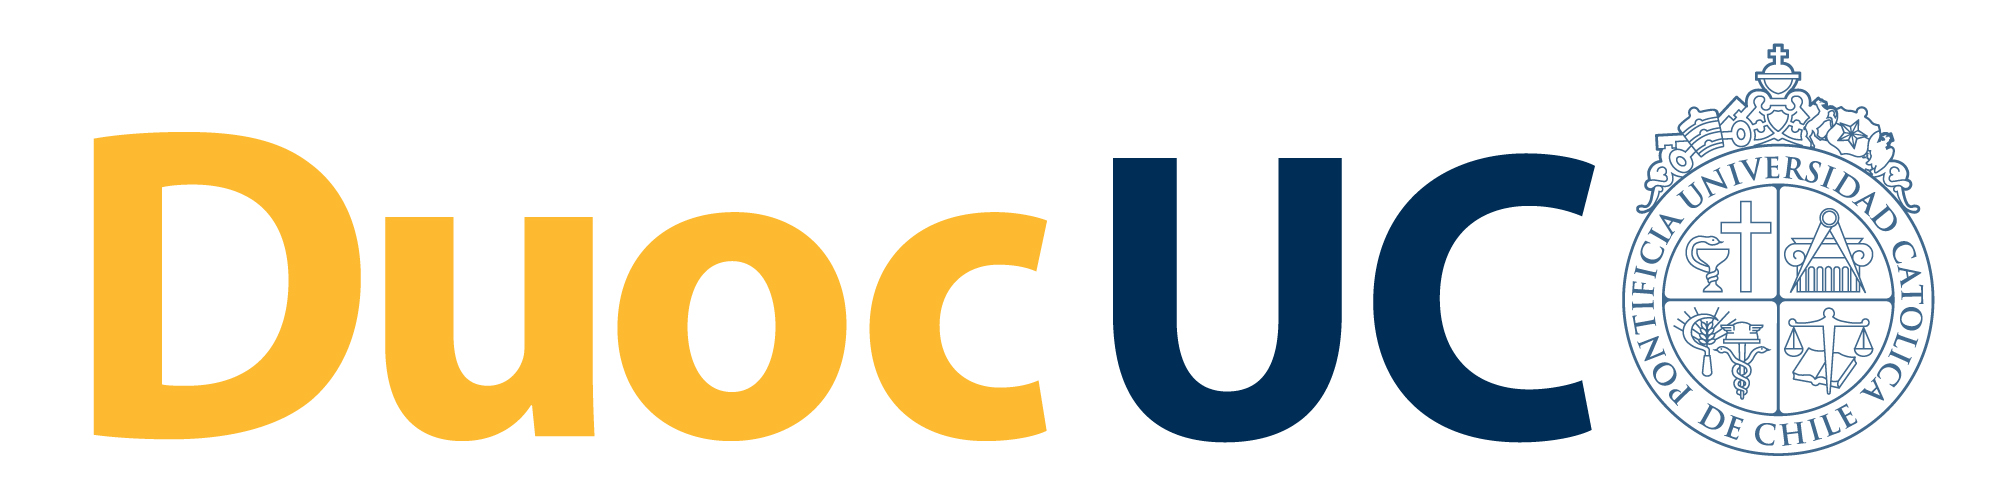 logo DUOC.jpg